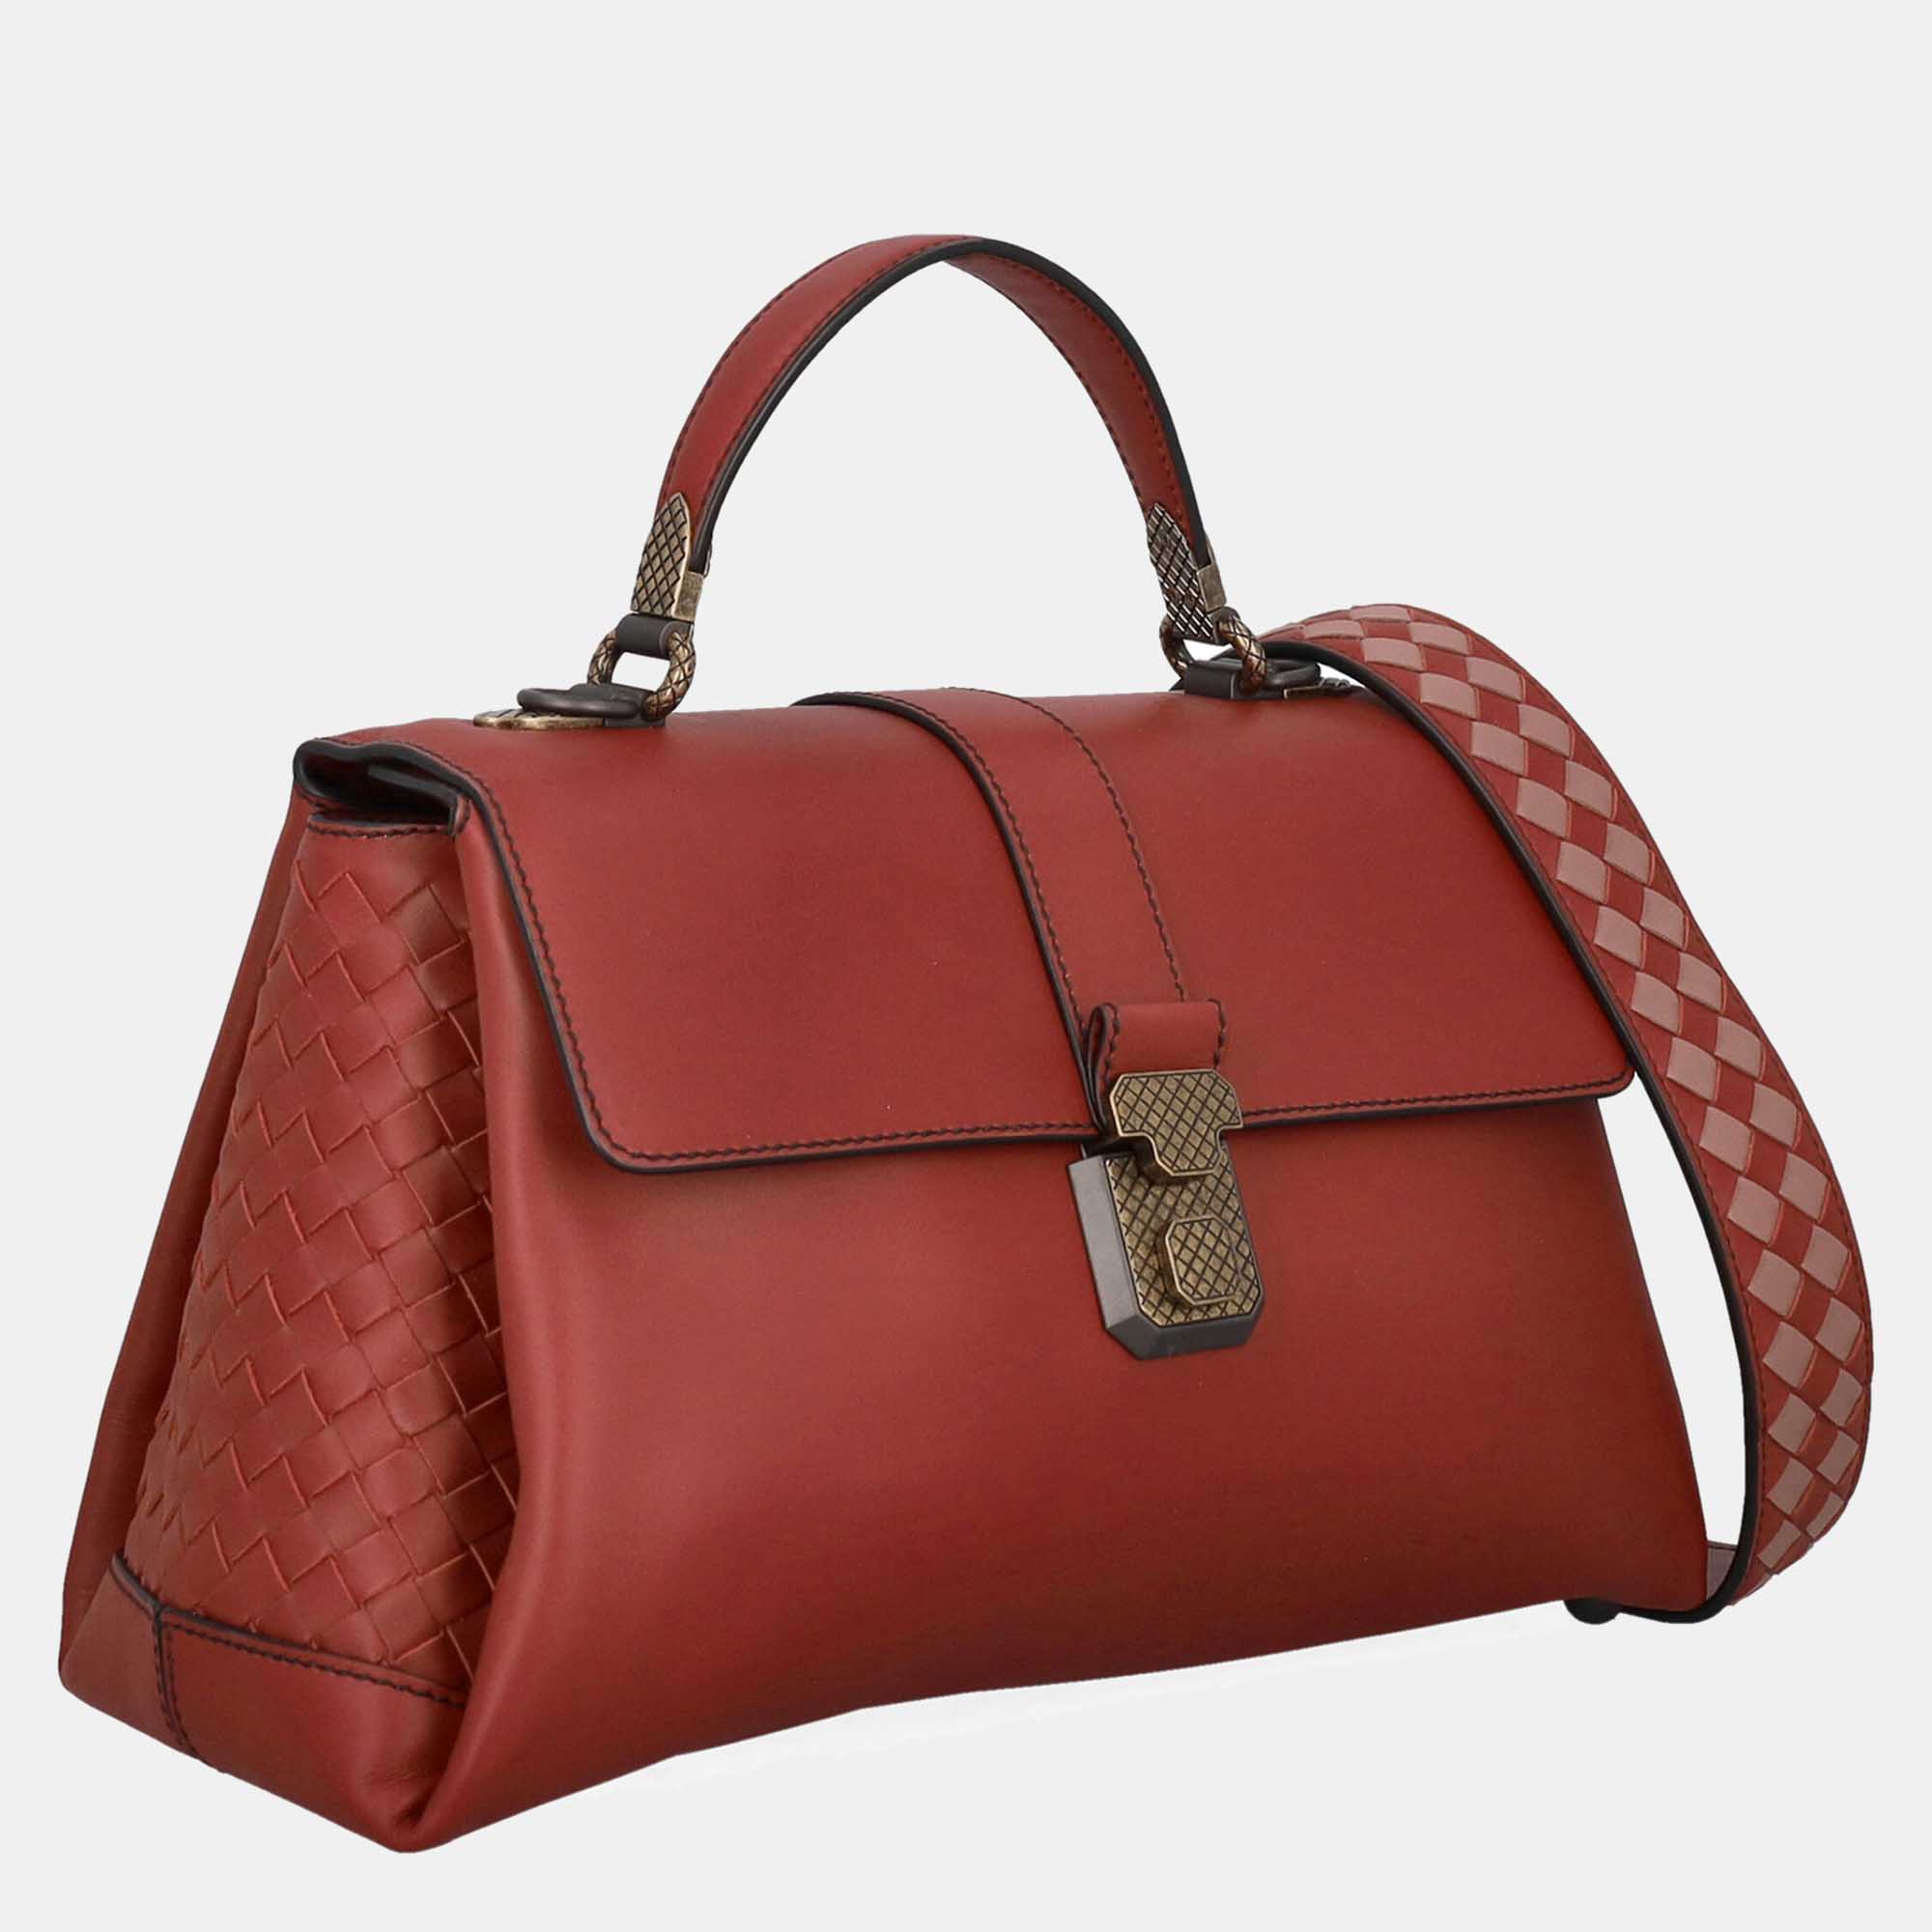 Bottega Veneta  Women's Leather Handbag - Burgundy - One Size